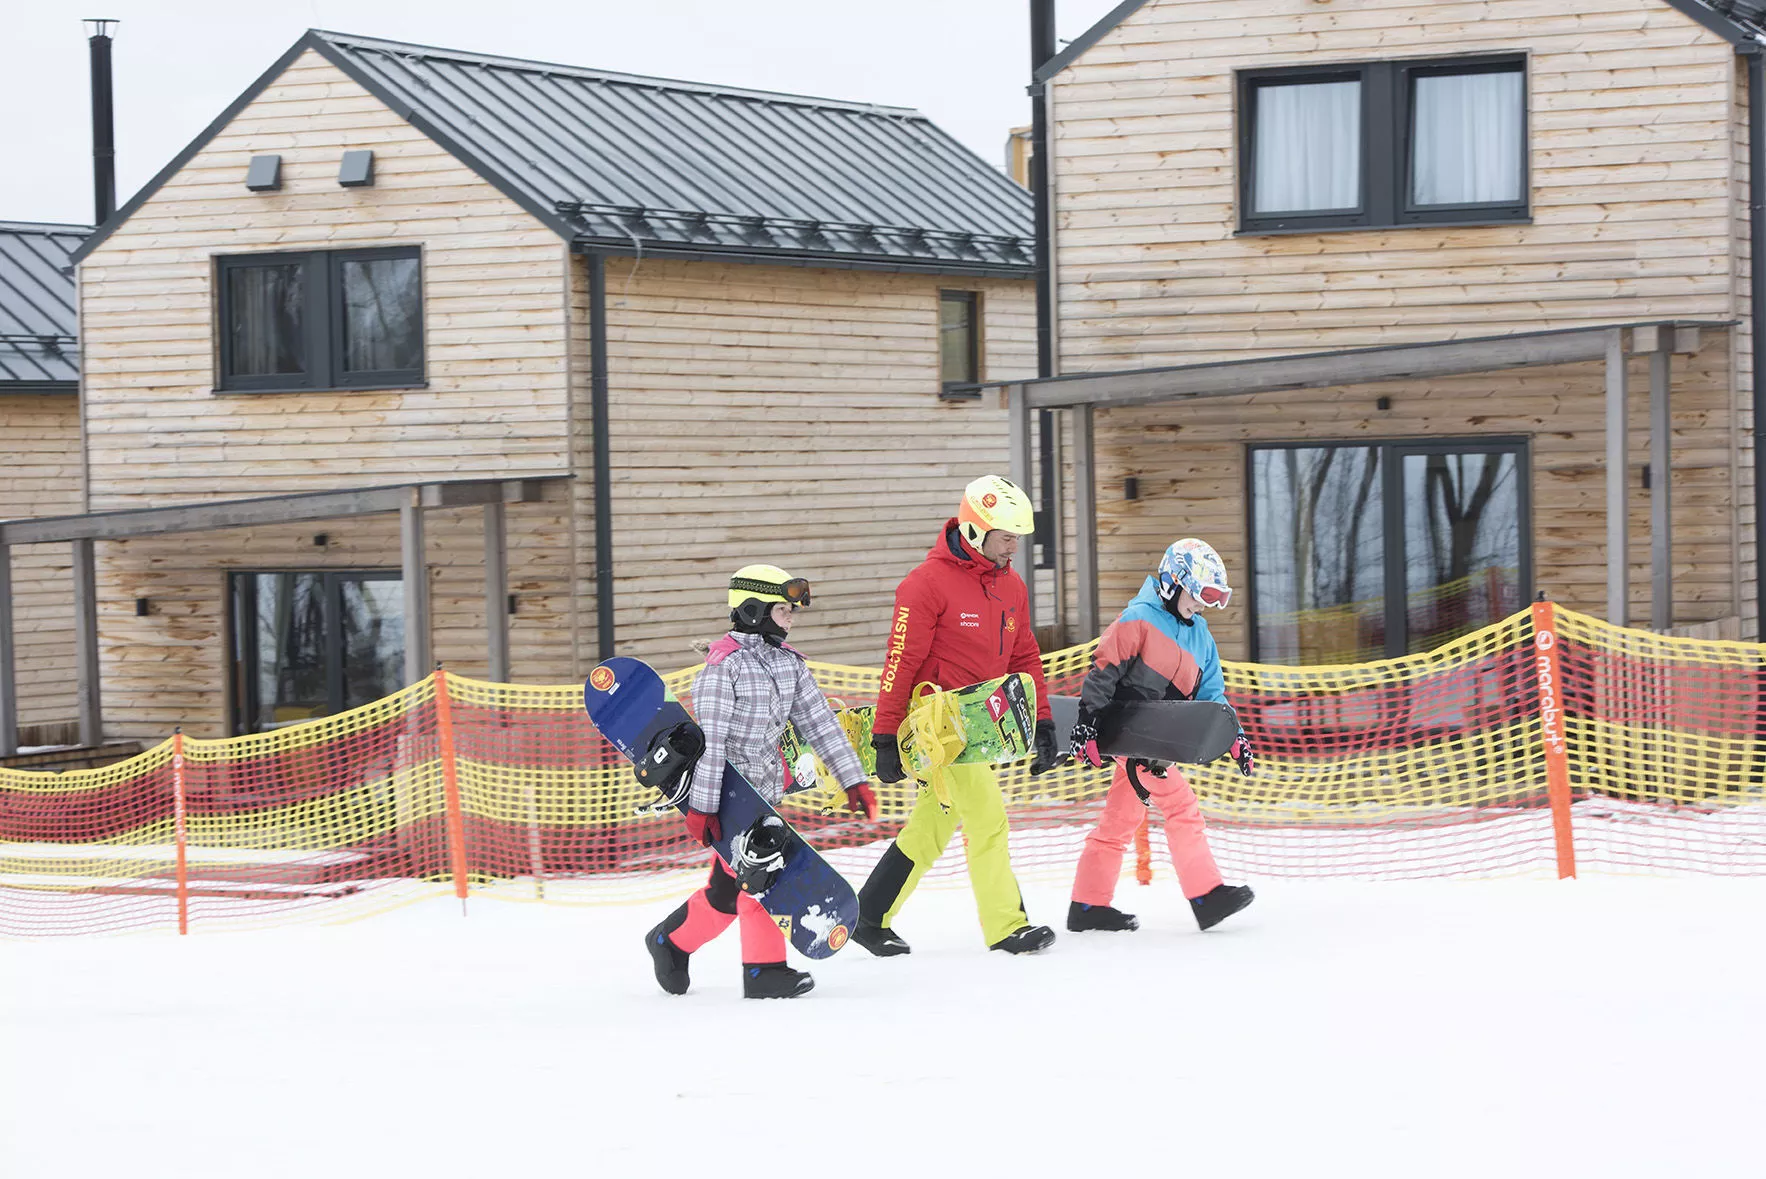 Ski School Smile in Slovakia, Europe | Snowboarding,Skiing - Rated 3.8